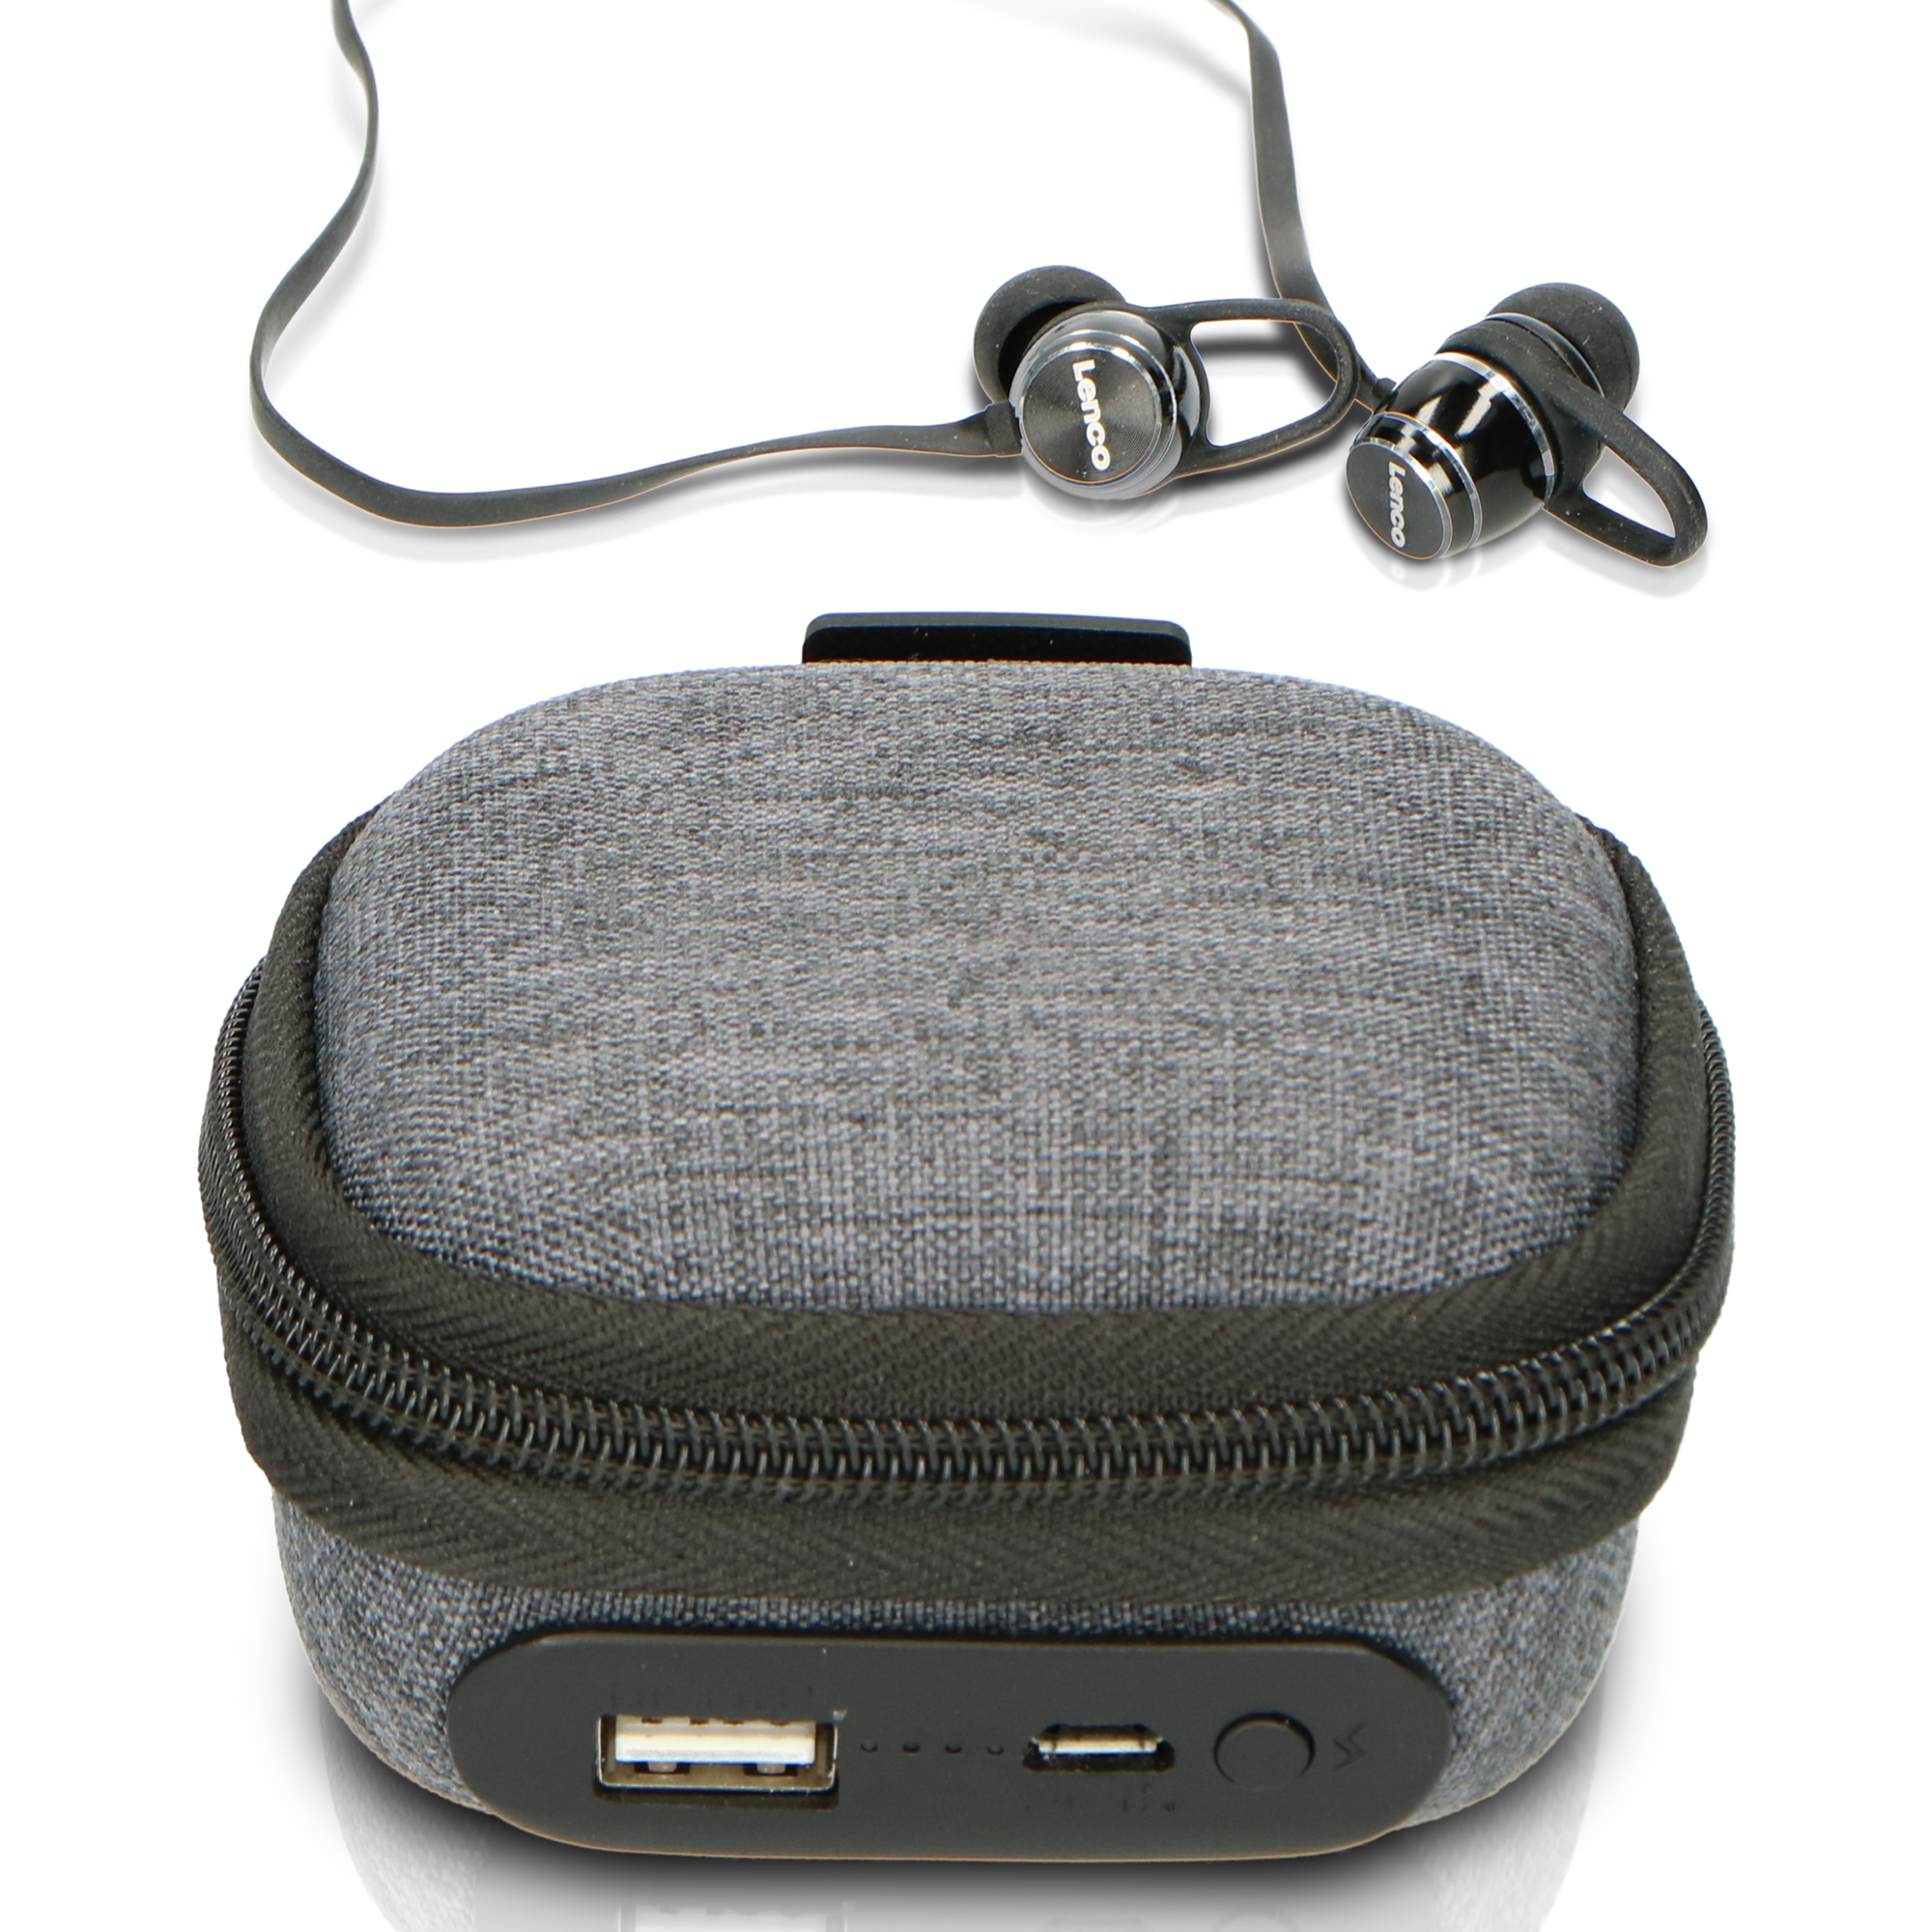 In-ear sweatproof, Powerbank-Tasche Headphone EPB-160BK Schwarz-Grau LENCO mit Bluetooth - Bluetooth